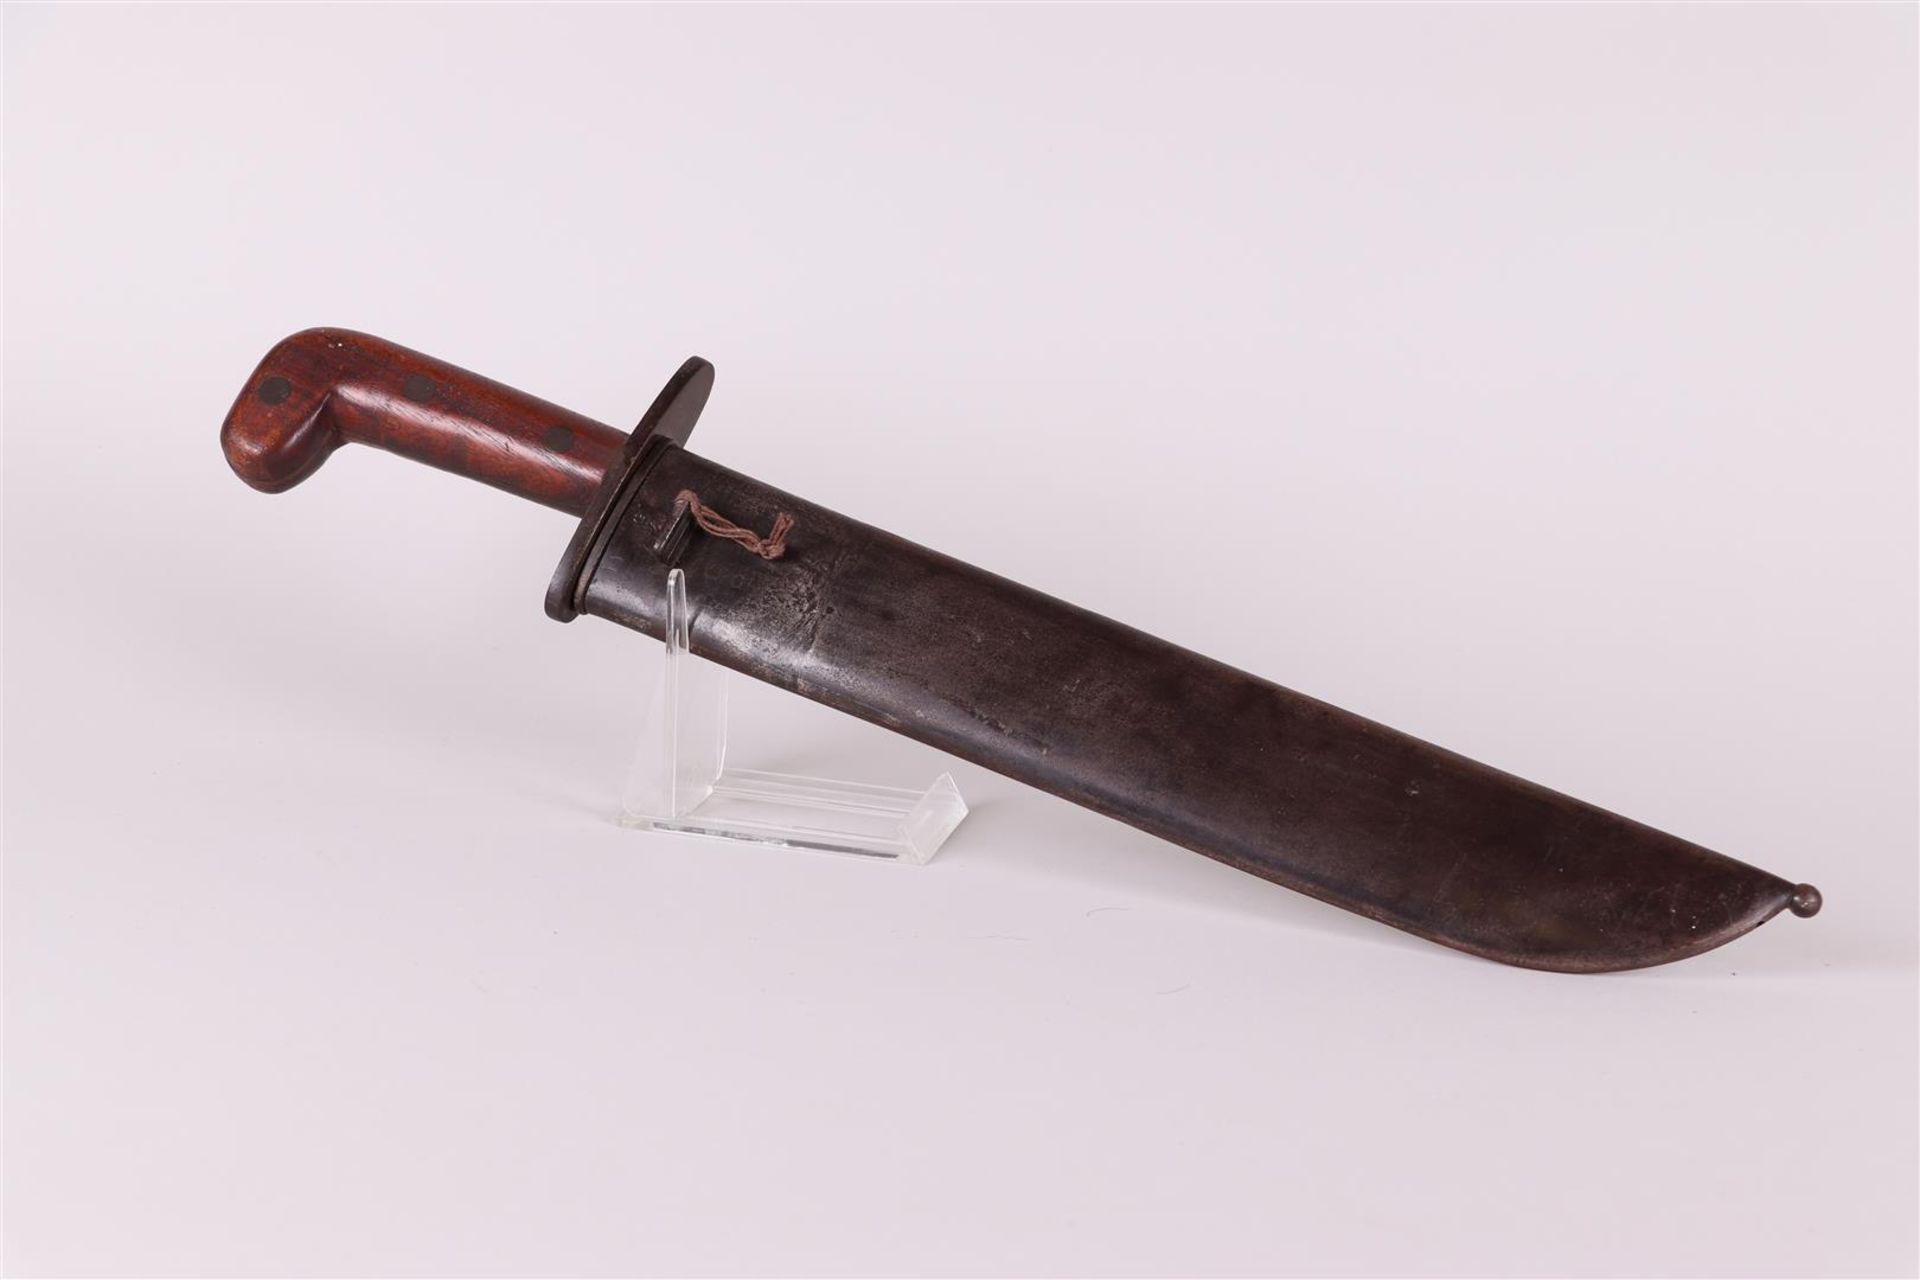 A KNIL (Koninklijk Nederlandsch-Indisch Leger) machete used by the Royal Navy.